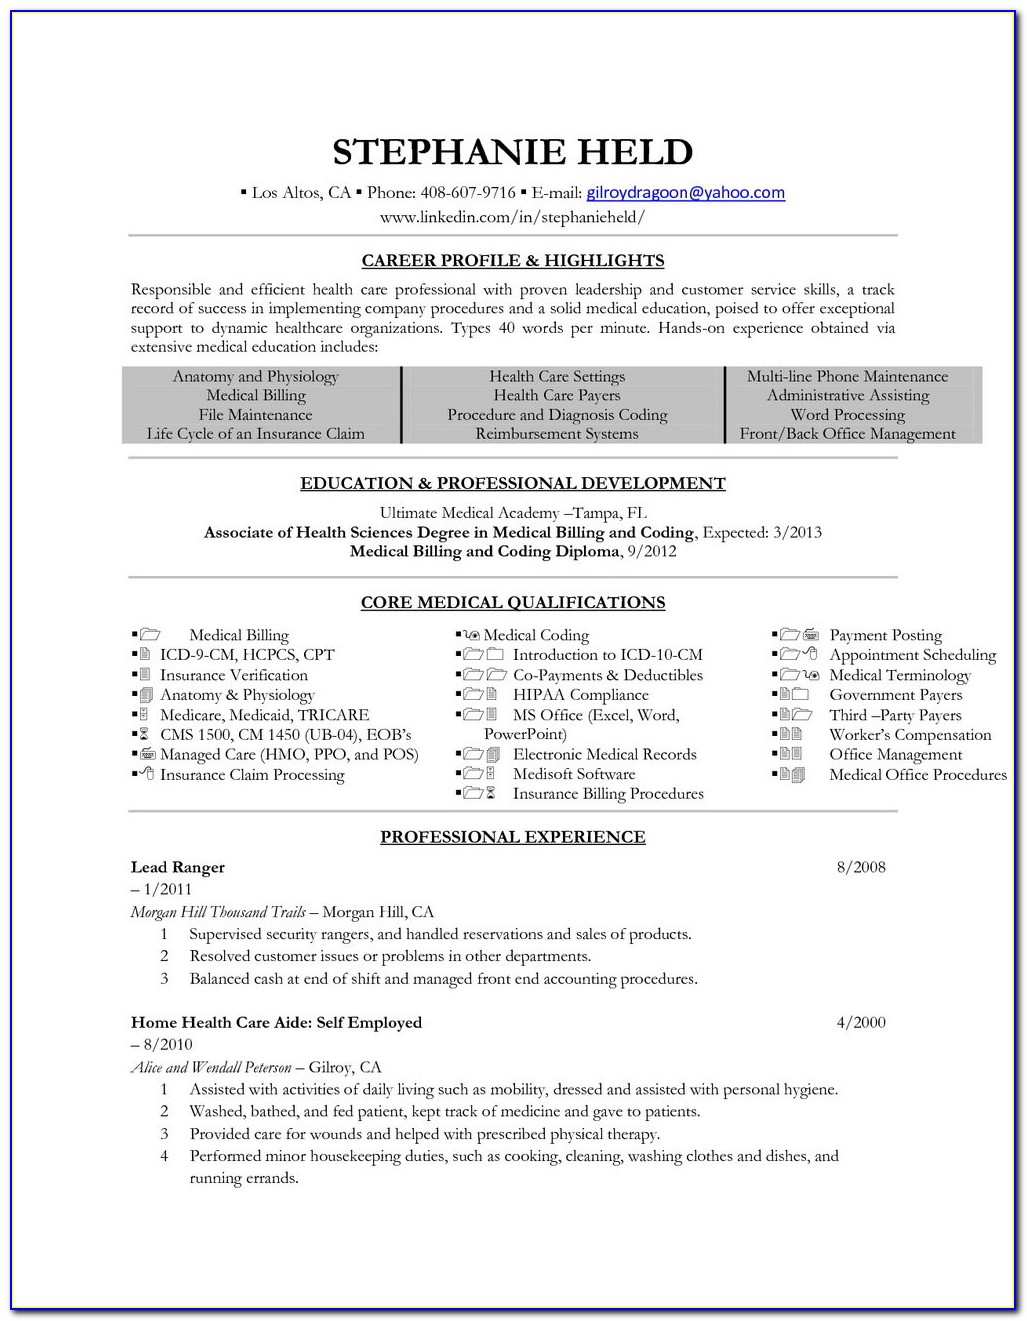 Sample Resume For Medical Insurance Billing And Coding